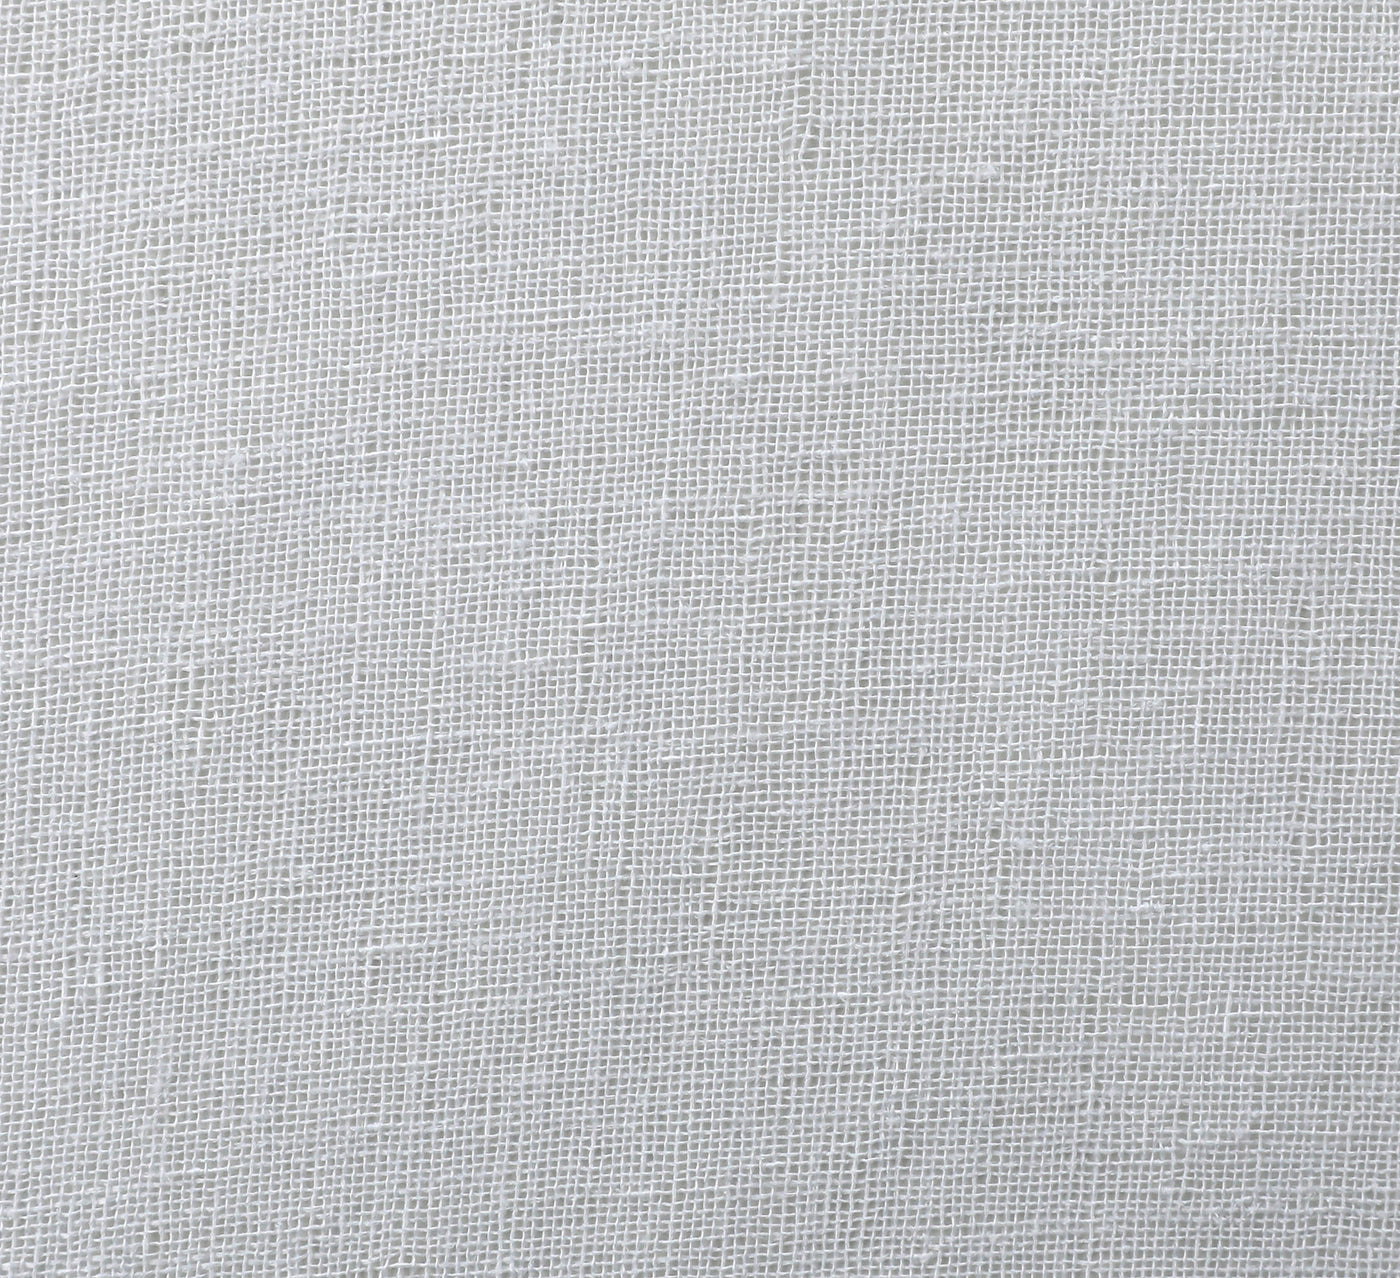 Sorrento S-Fold Sheer Curtain - White - Baha